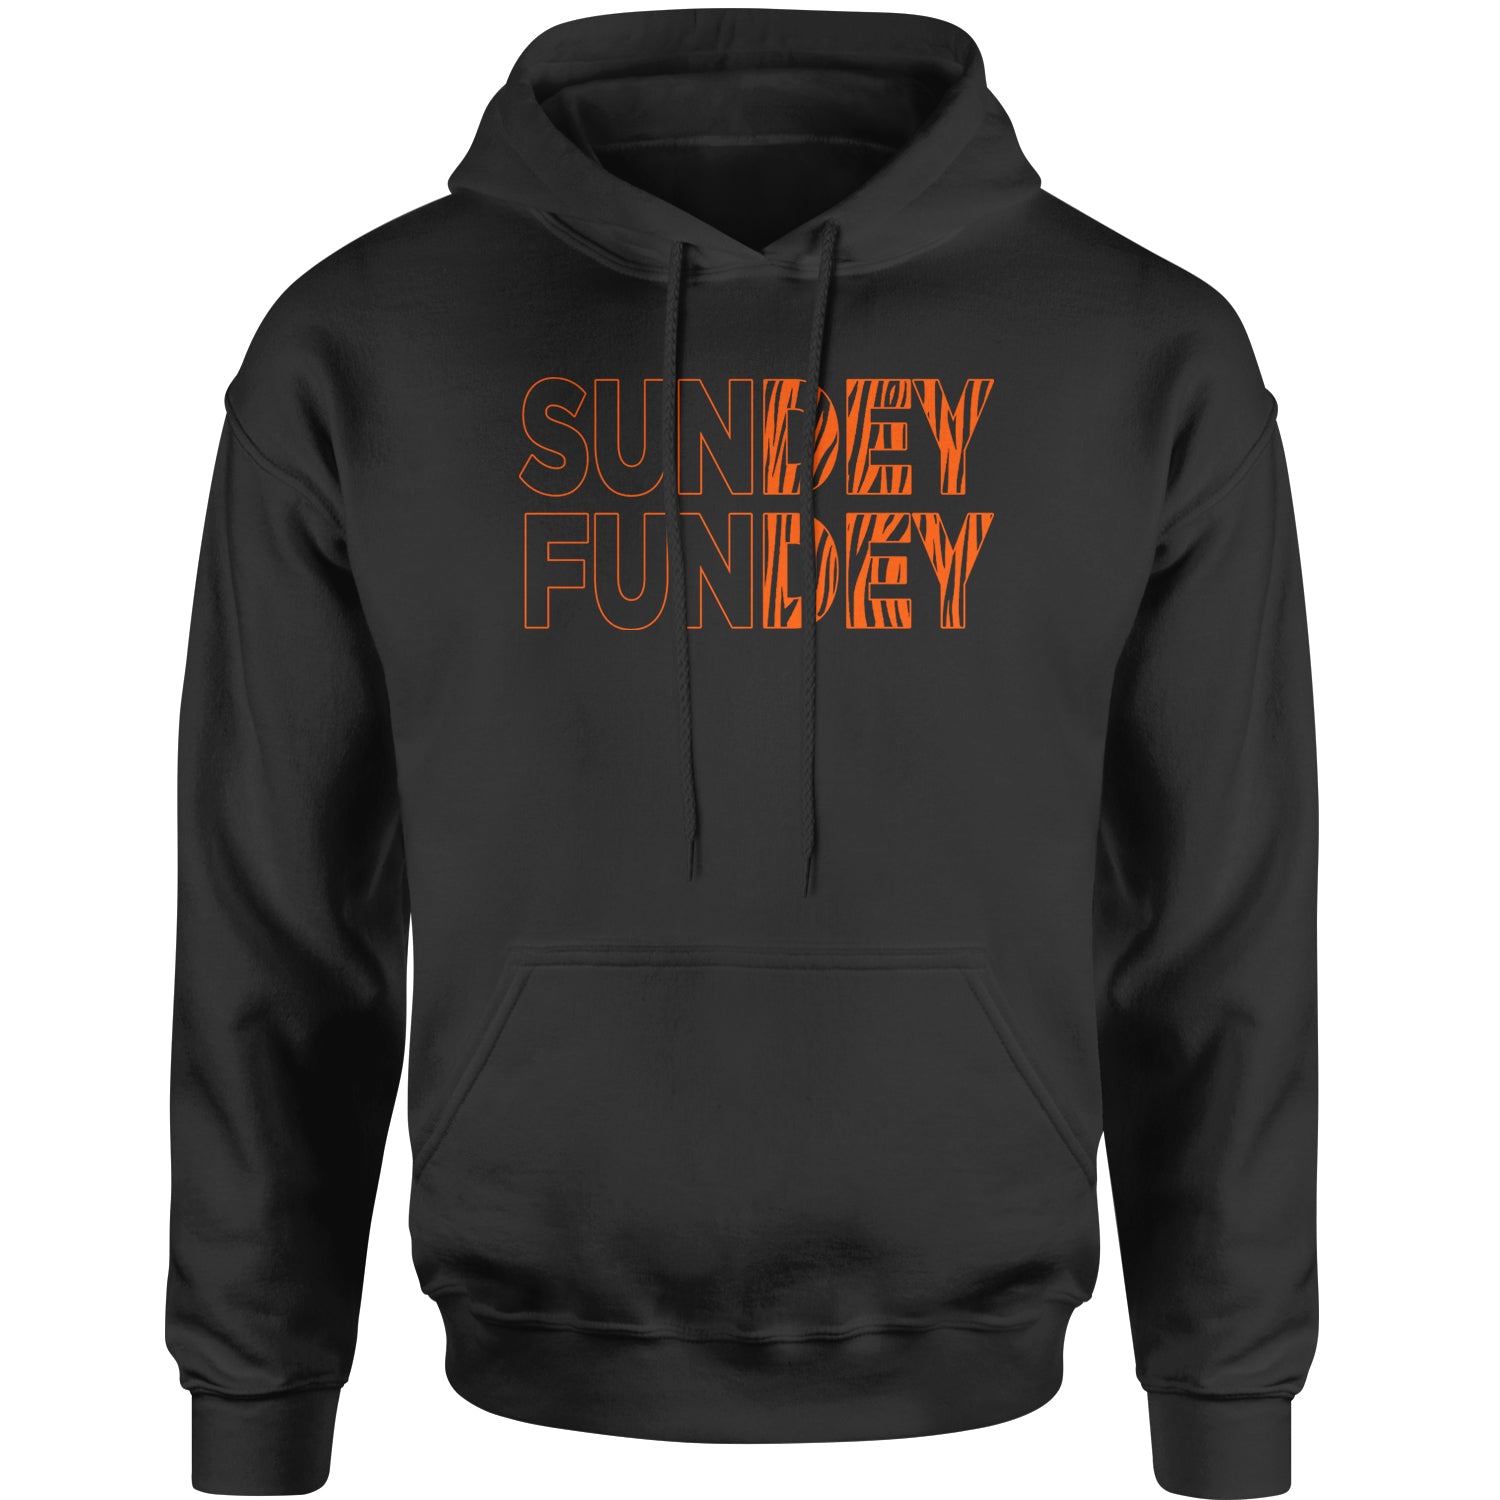 SunDEY FunDEY Sunday Funday Adult Hoodie Sweatshirt ball, burrow, dey, foot, football, joe, ohio, sports, who by Expression Tees